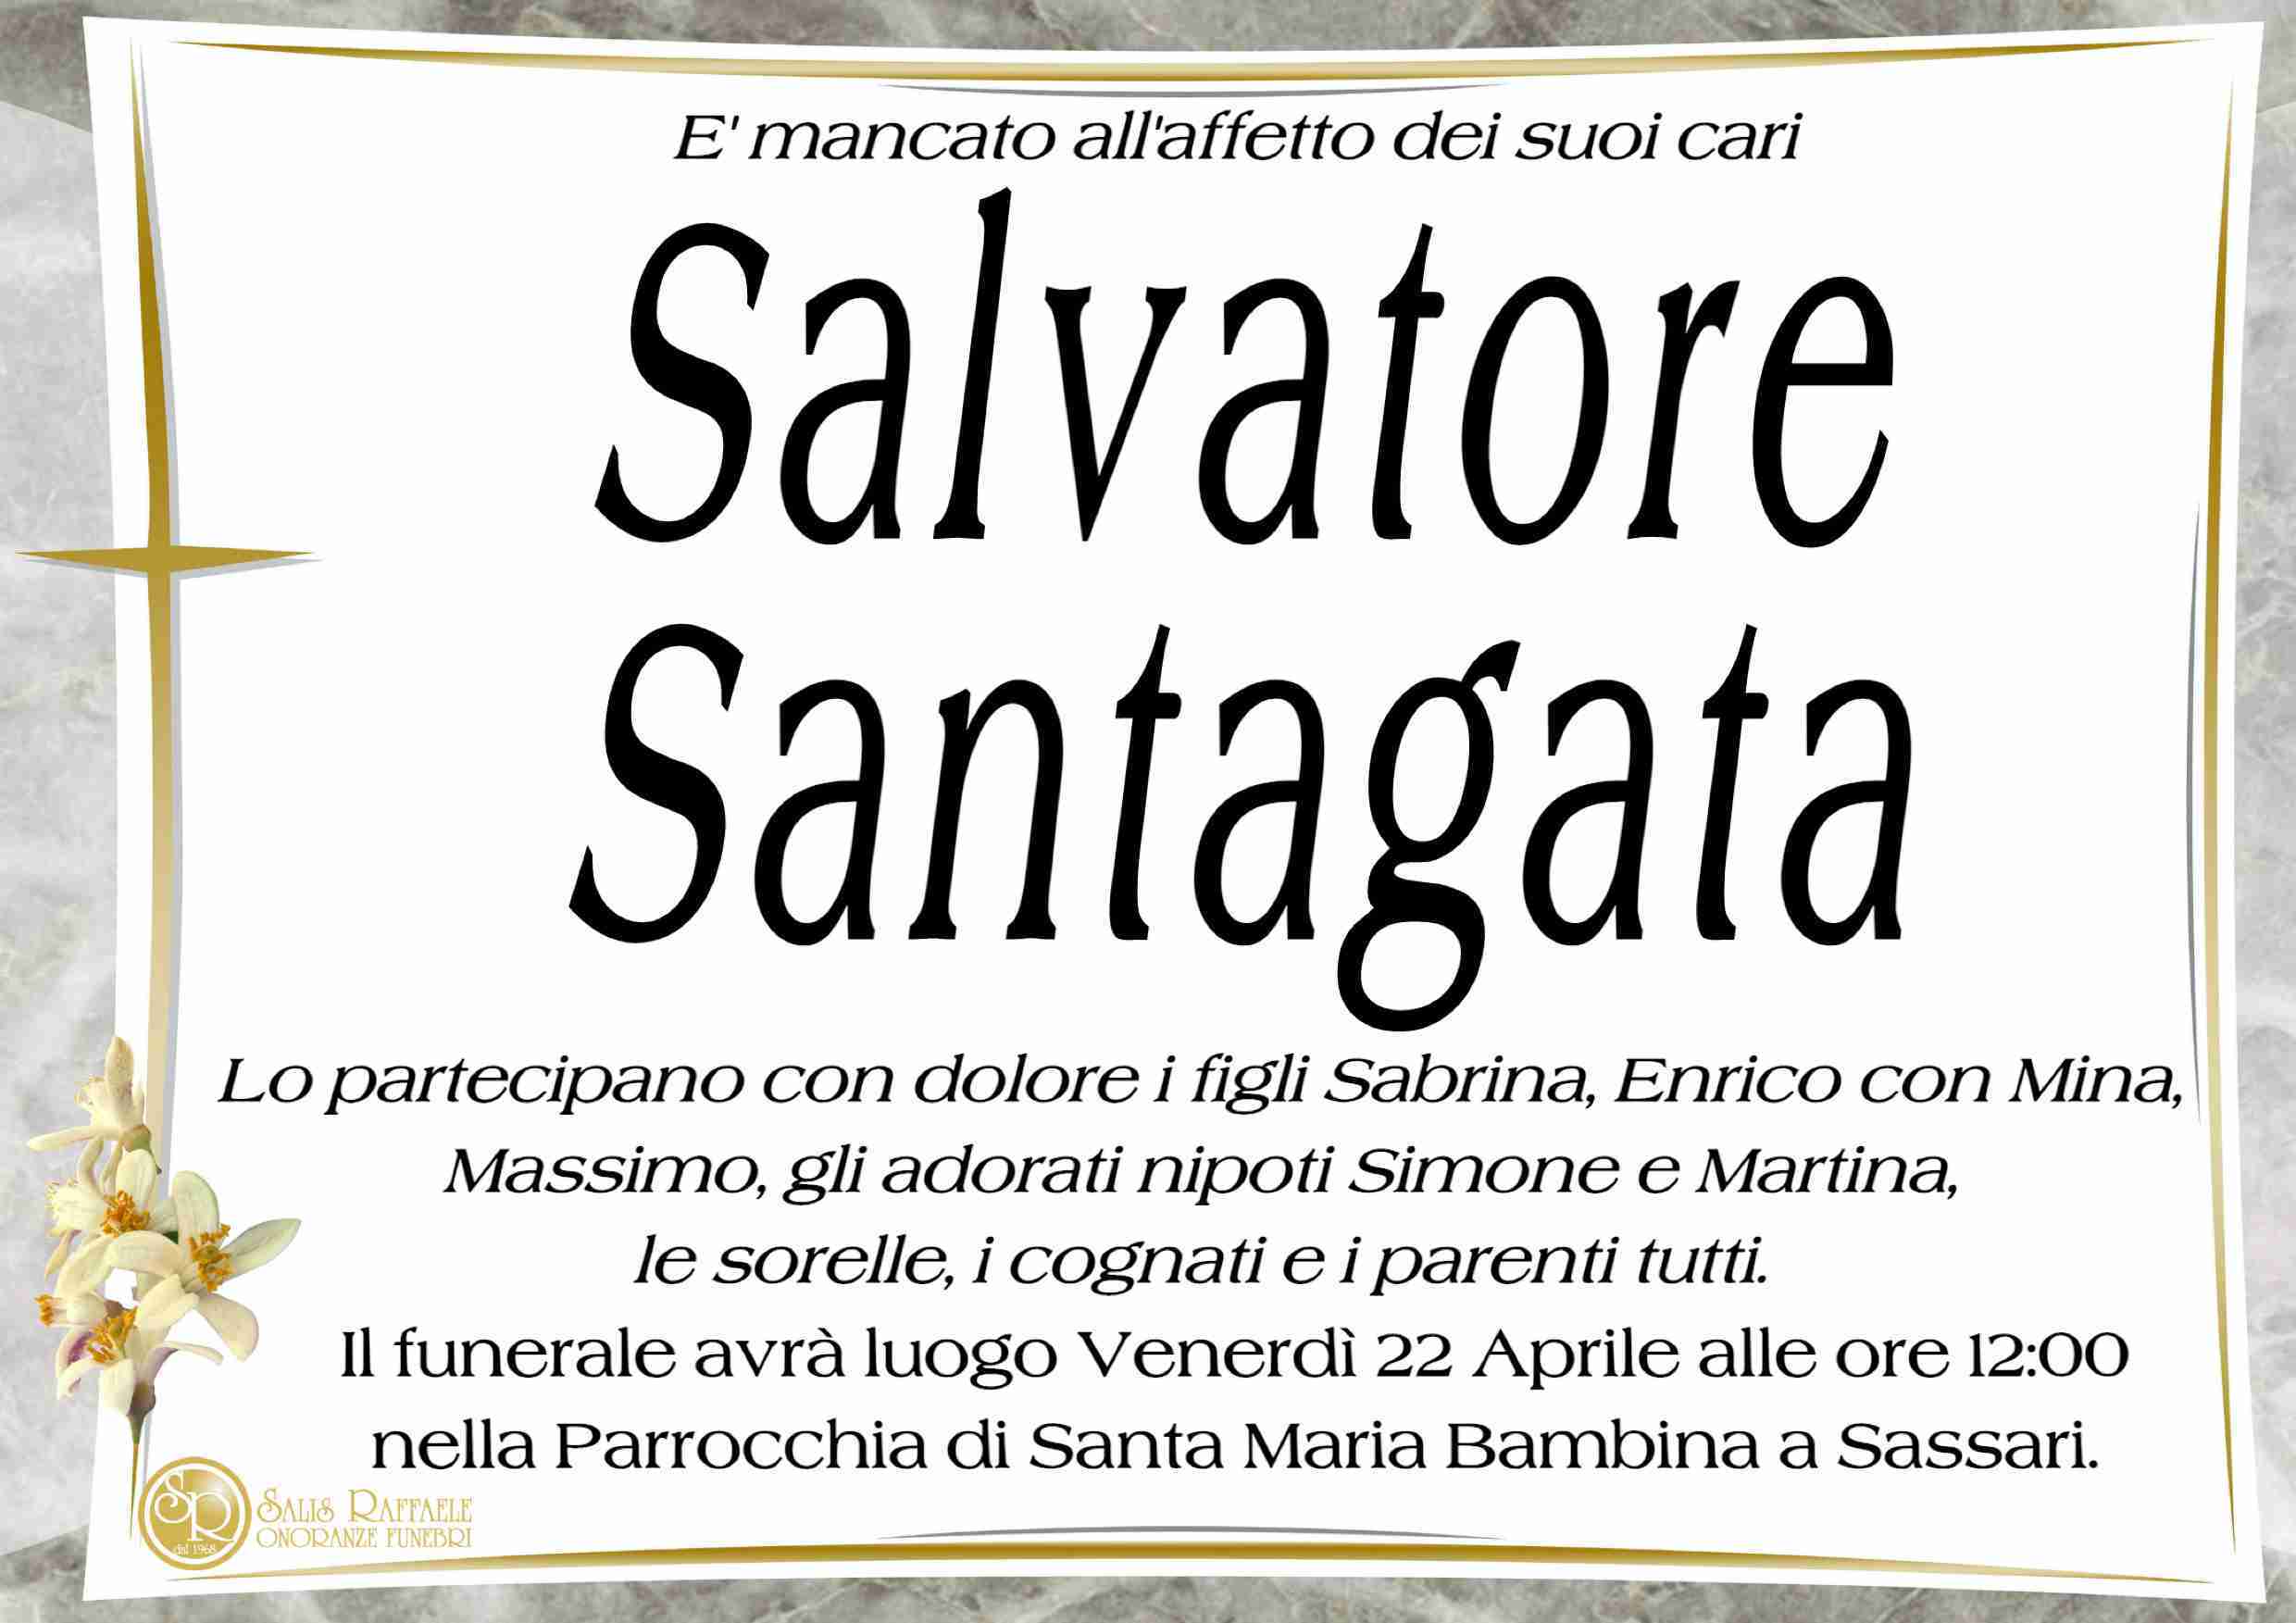 Salvatore Santagata